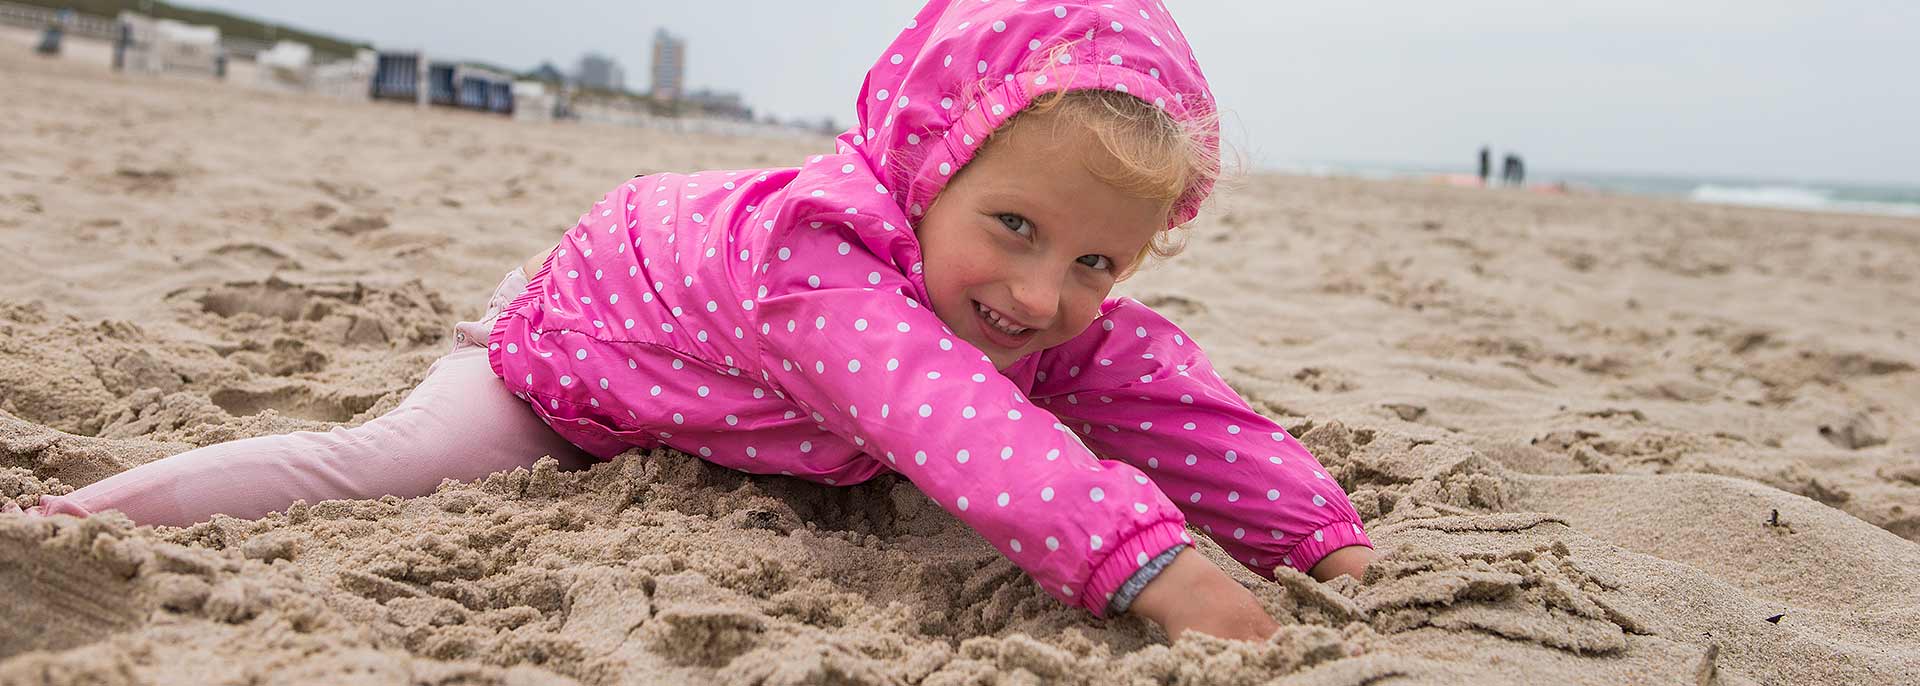 Kind buddelt im Sand am Strand 